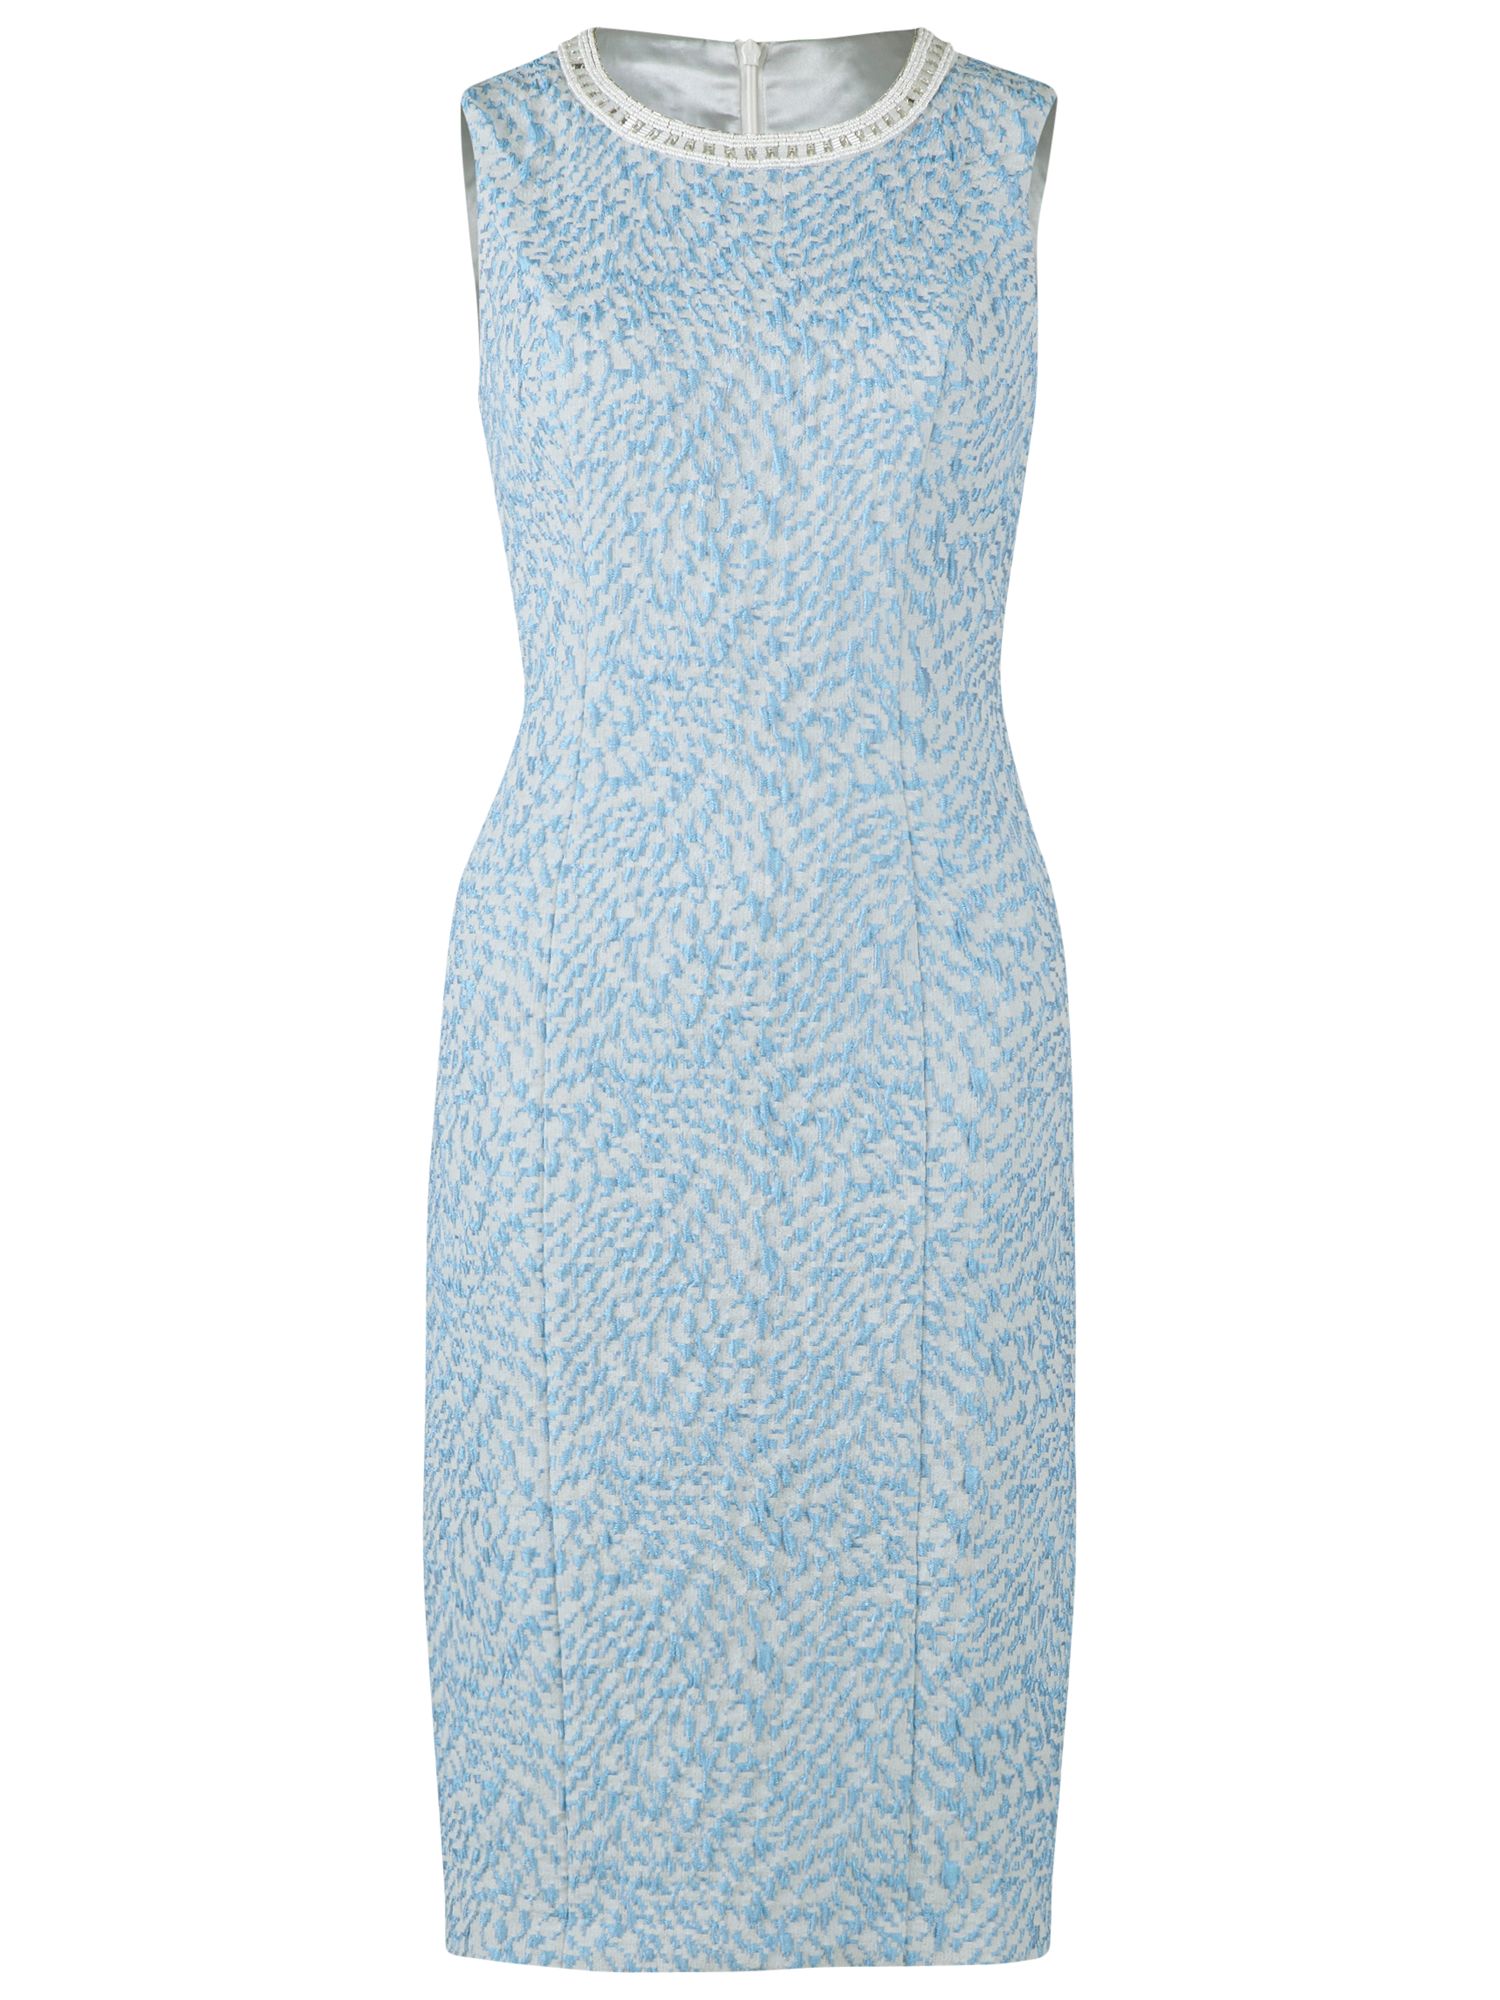 Gina Bacconi Jacquard Dress, Blue at John Lewis & Partners